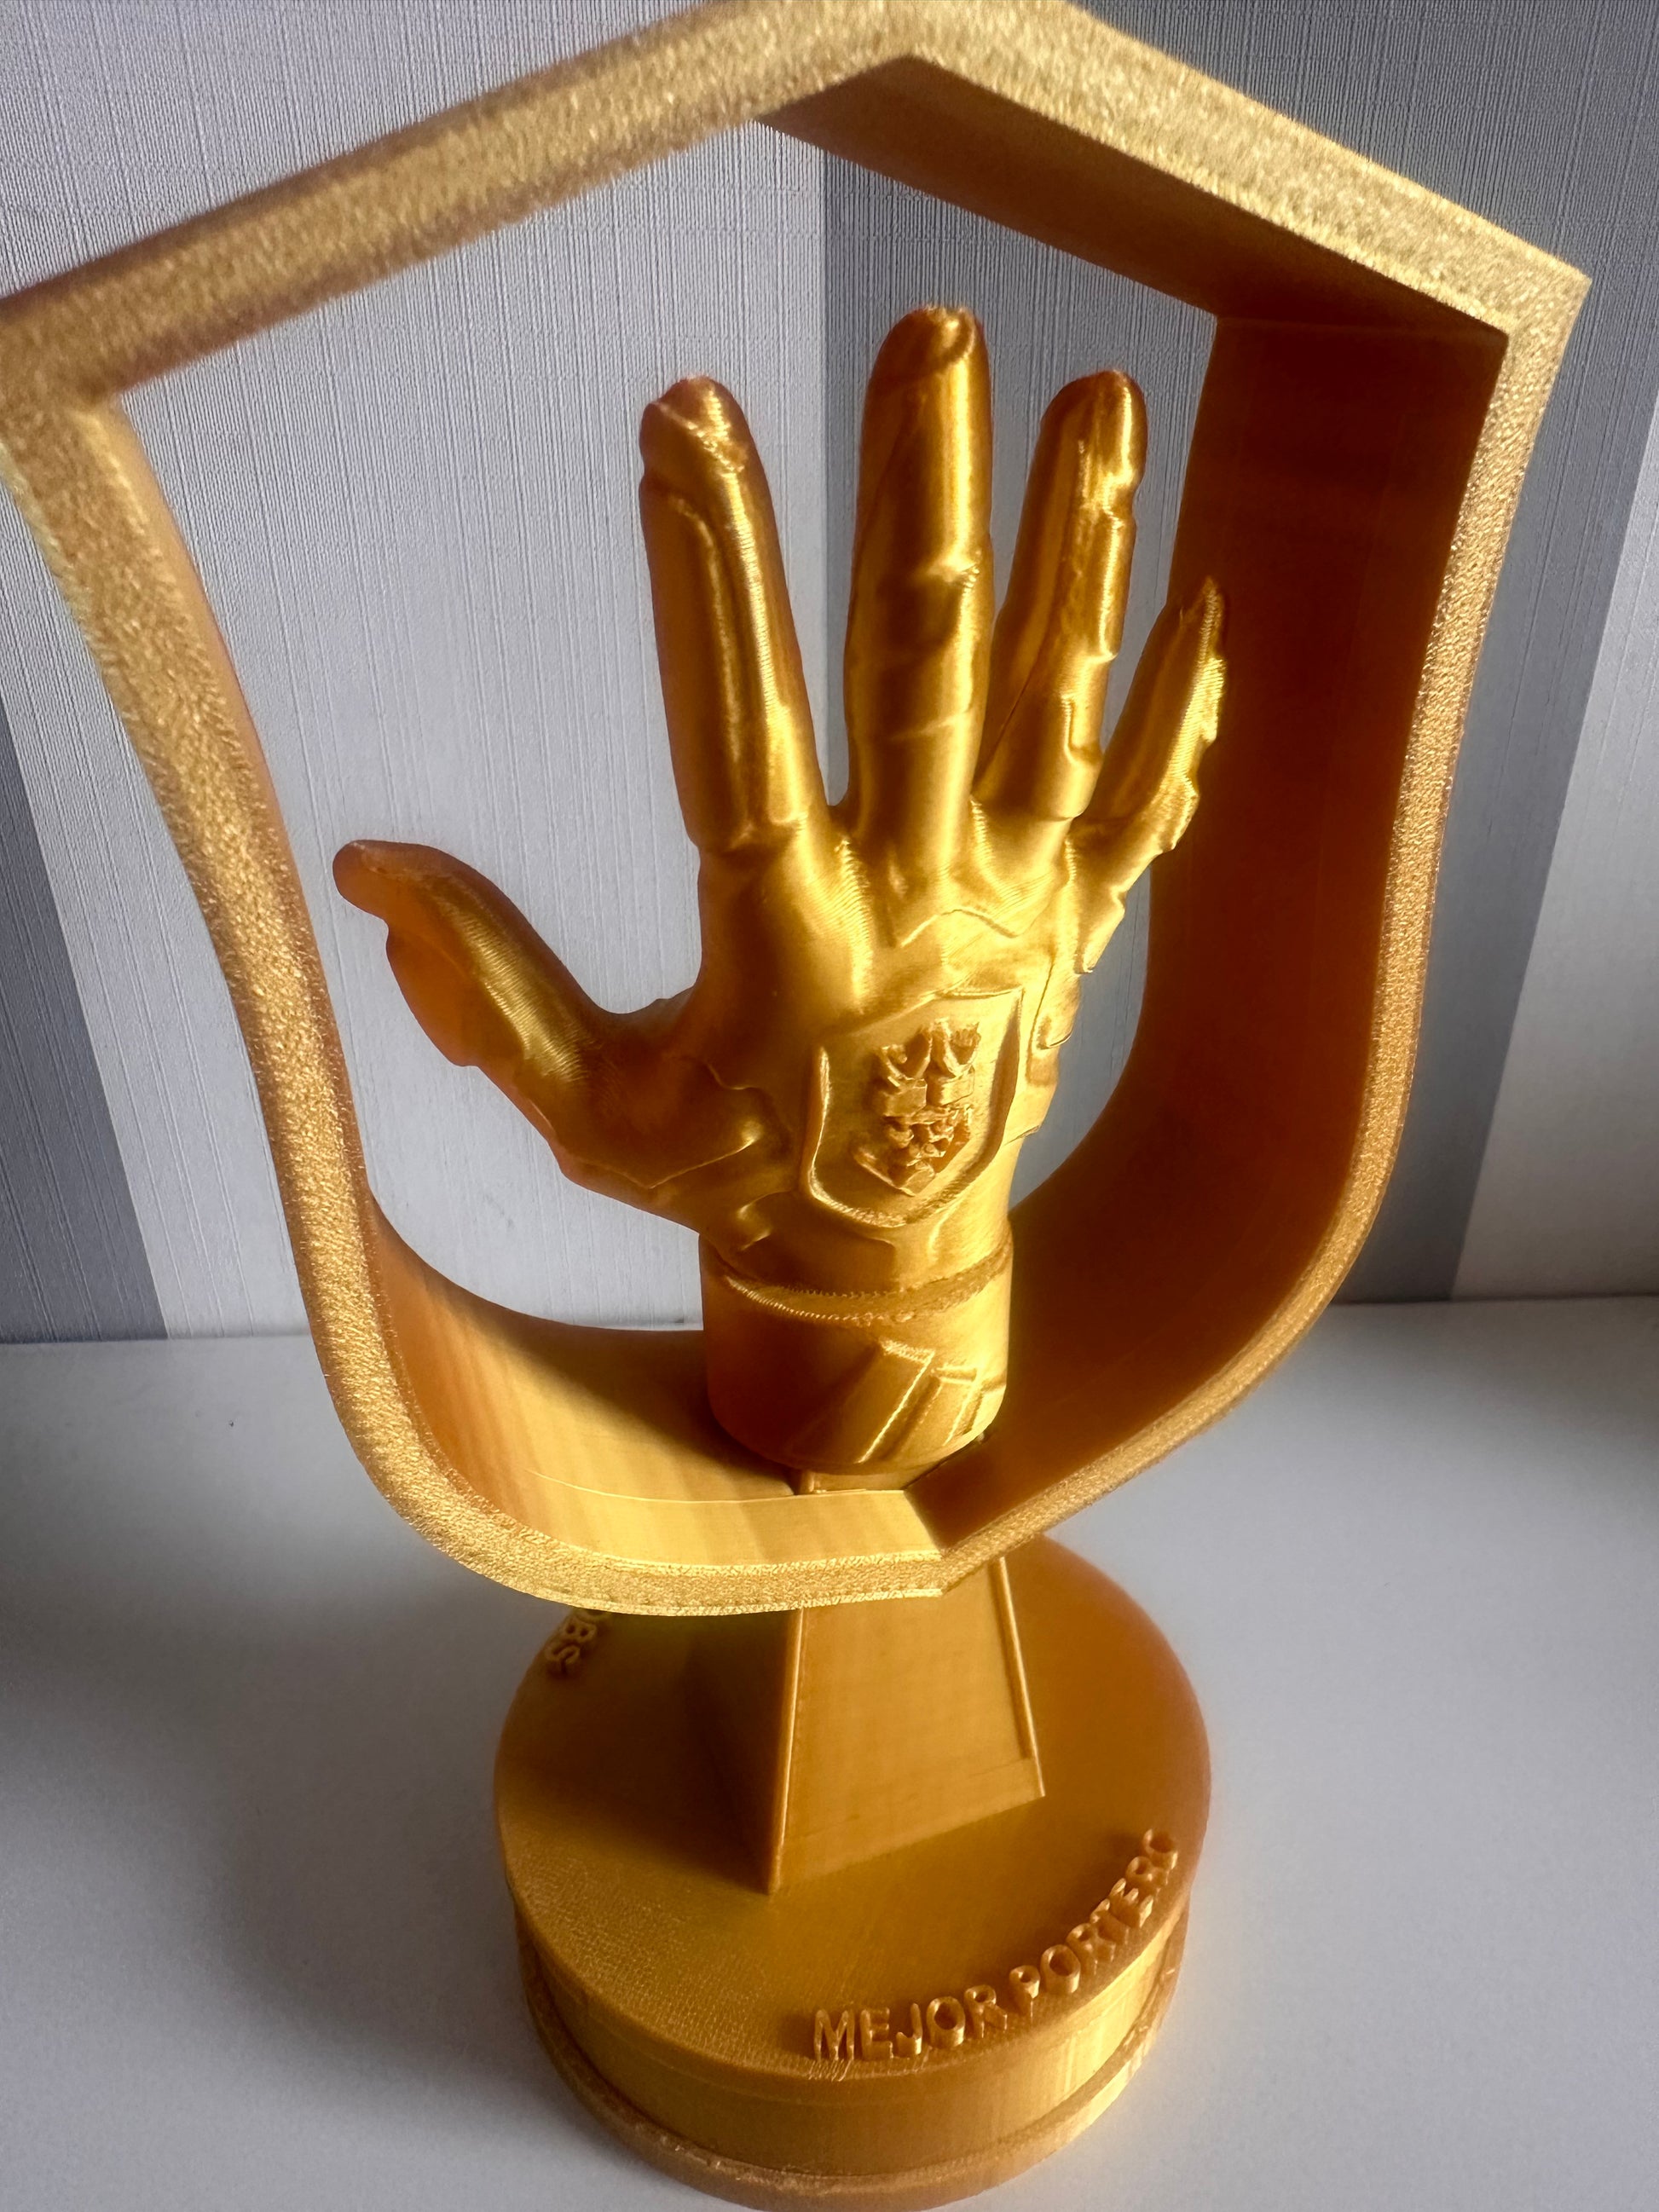 Trofeo guante de oro Kings League 